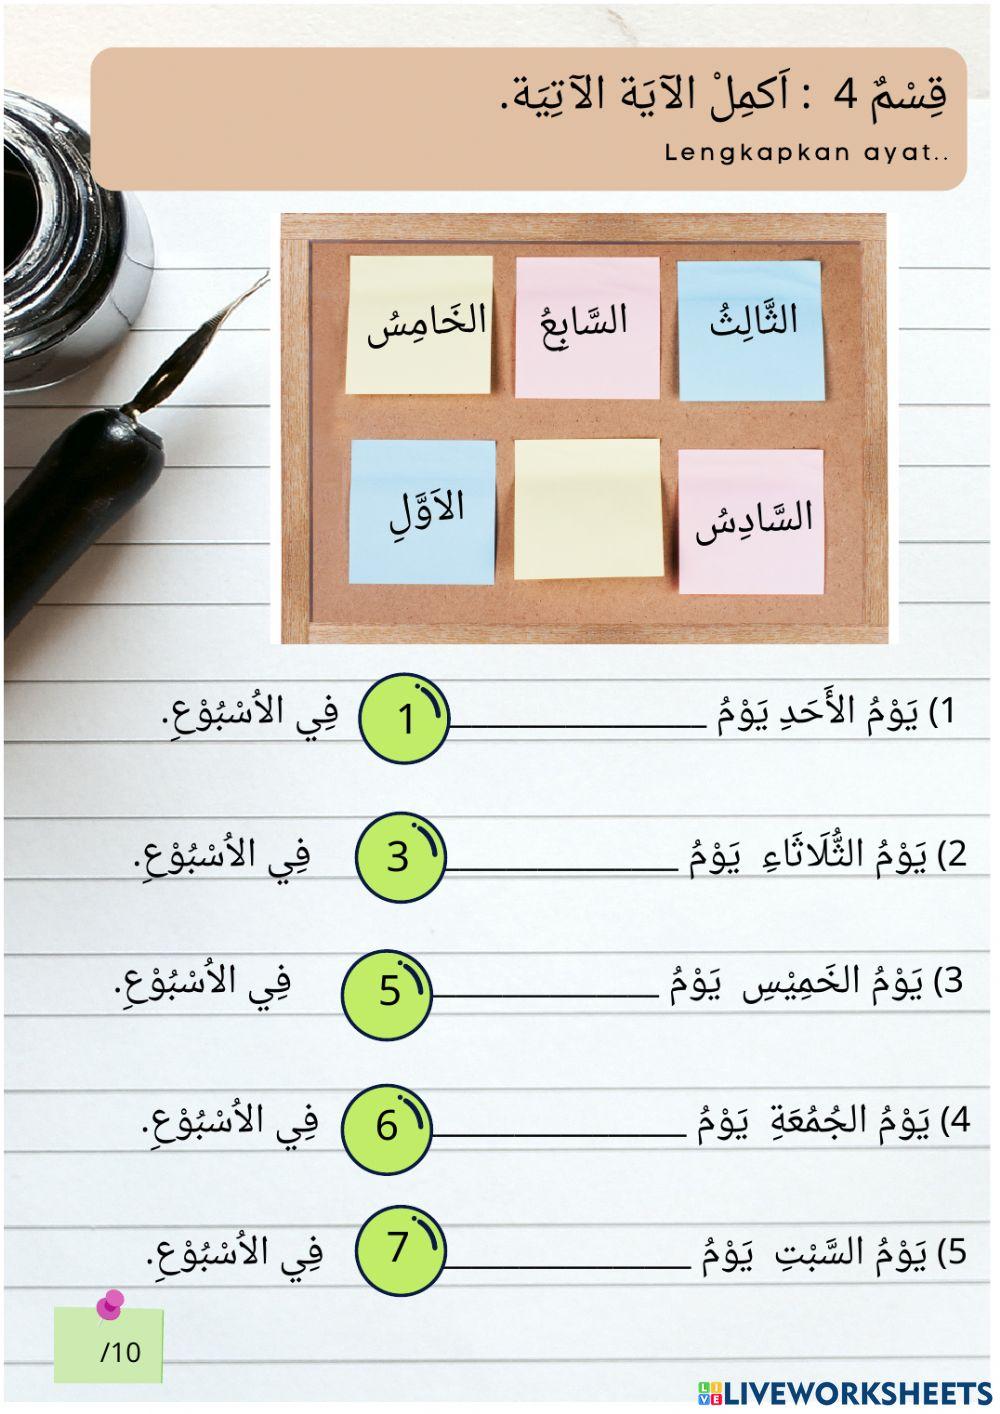 Pentaksiran sumatif bahasa arab tahun 6 siri (ii)